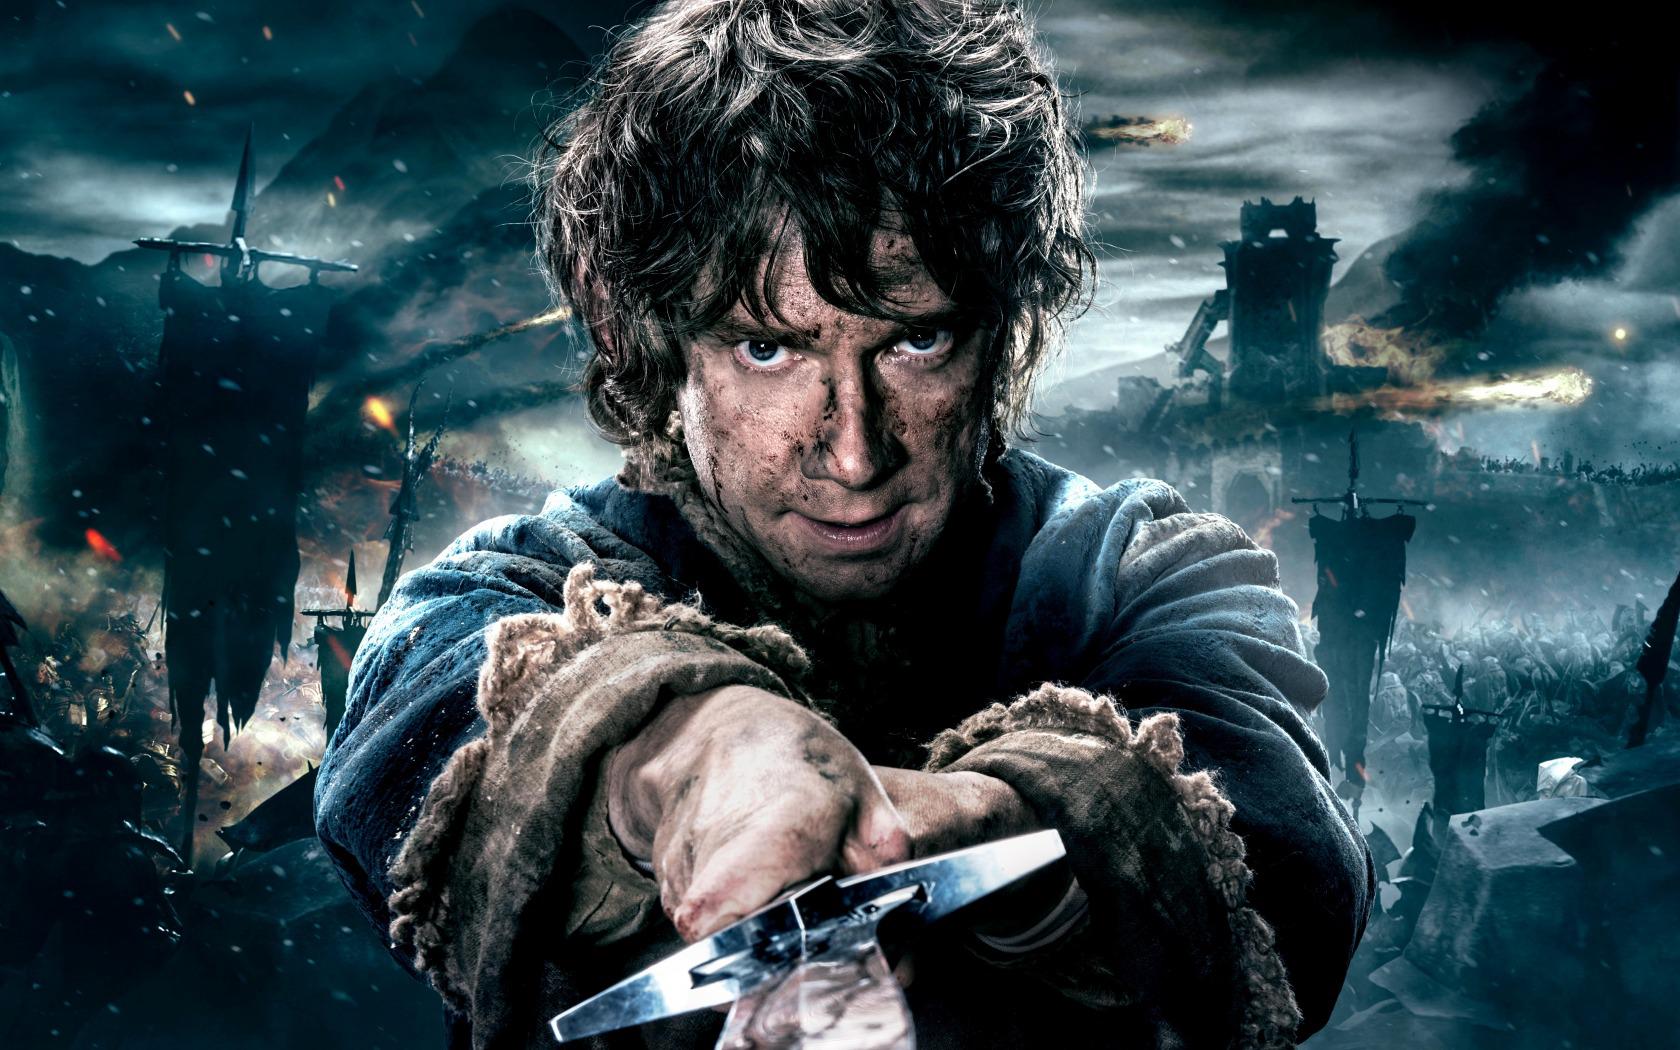 Gandalf Bilbo Baggins Hobbit 3 HD Wallpaper, get it now